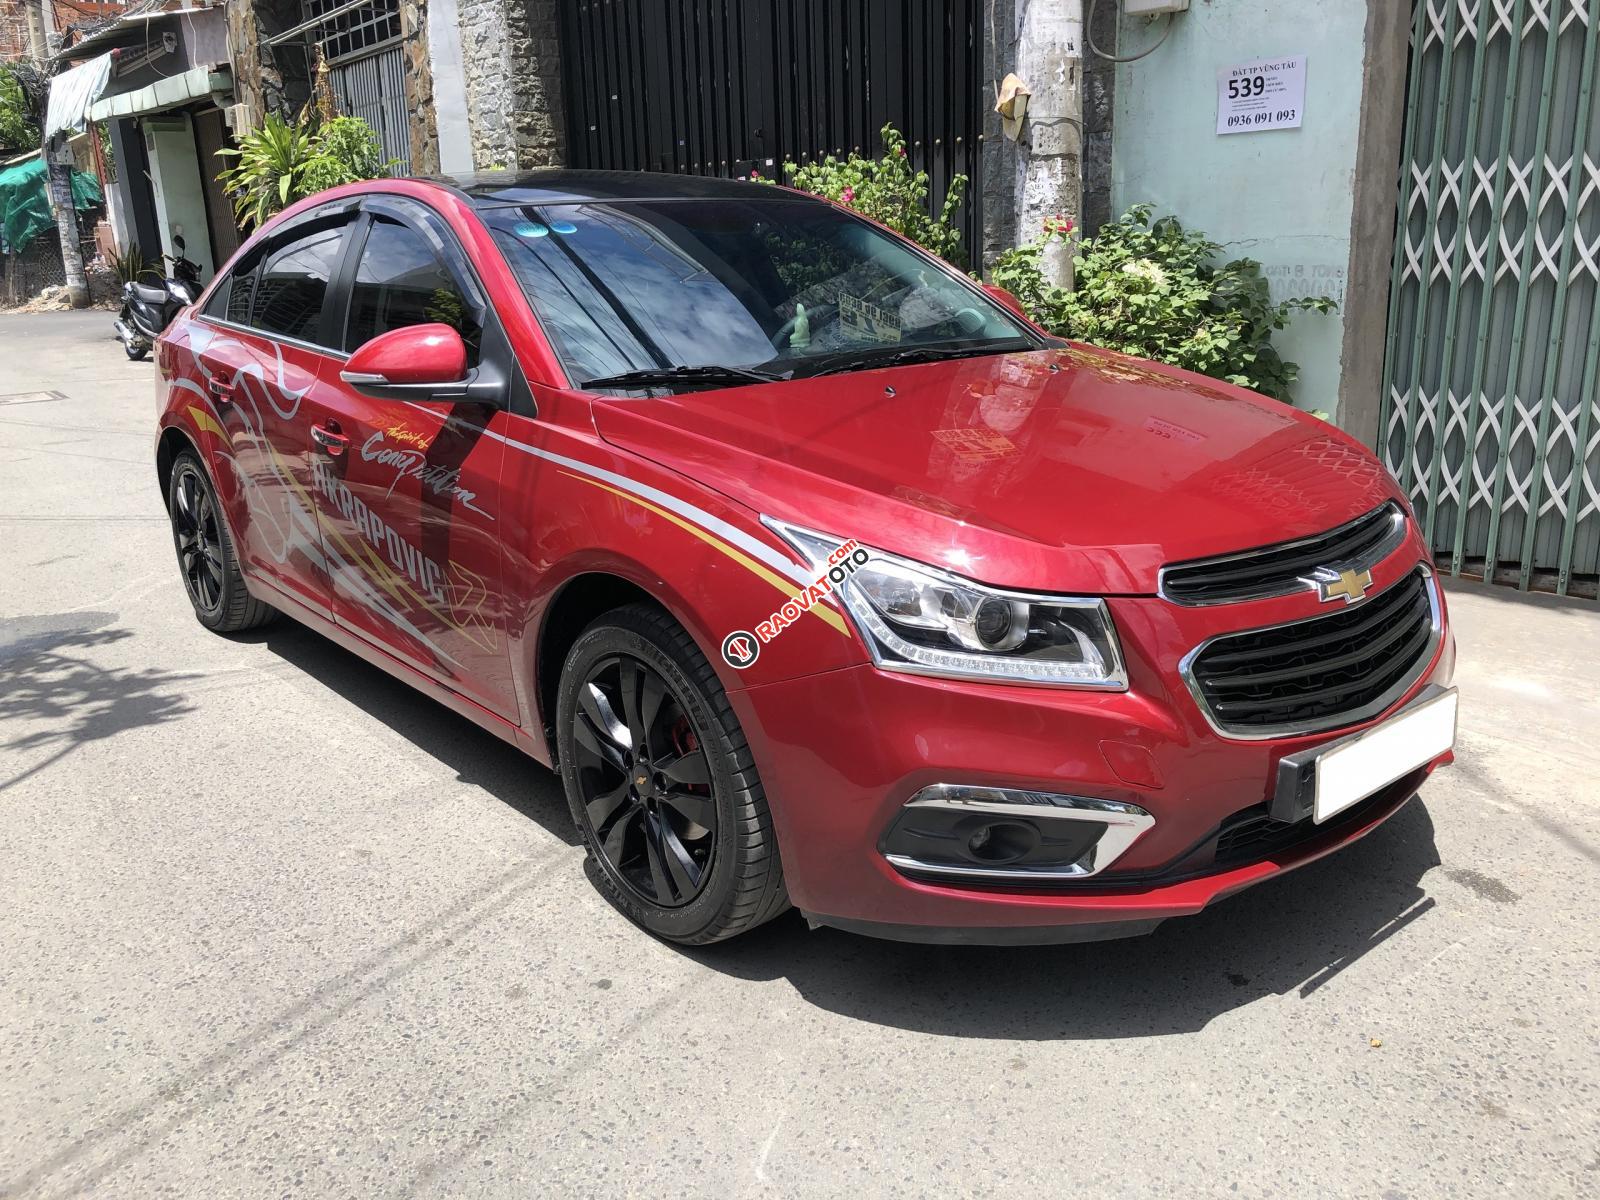 Cần bán xe Chevrolet Cruze LTZ 2018 màu đỏ mâm đen, BSTP-1